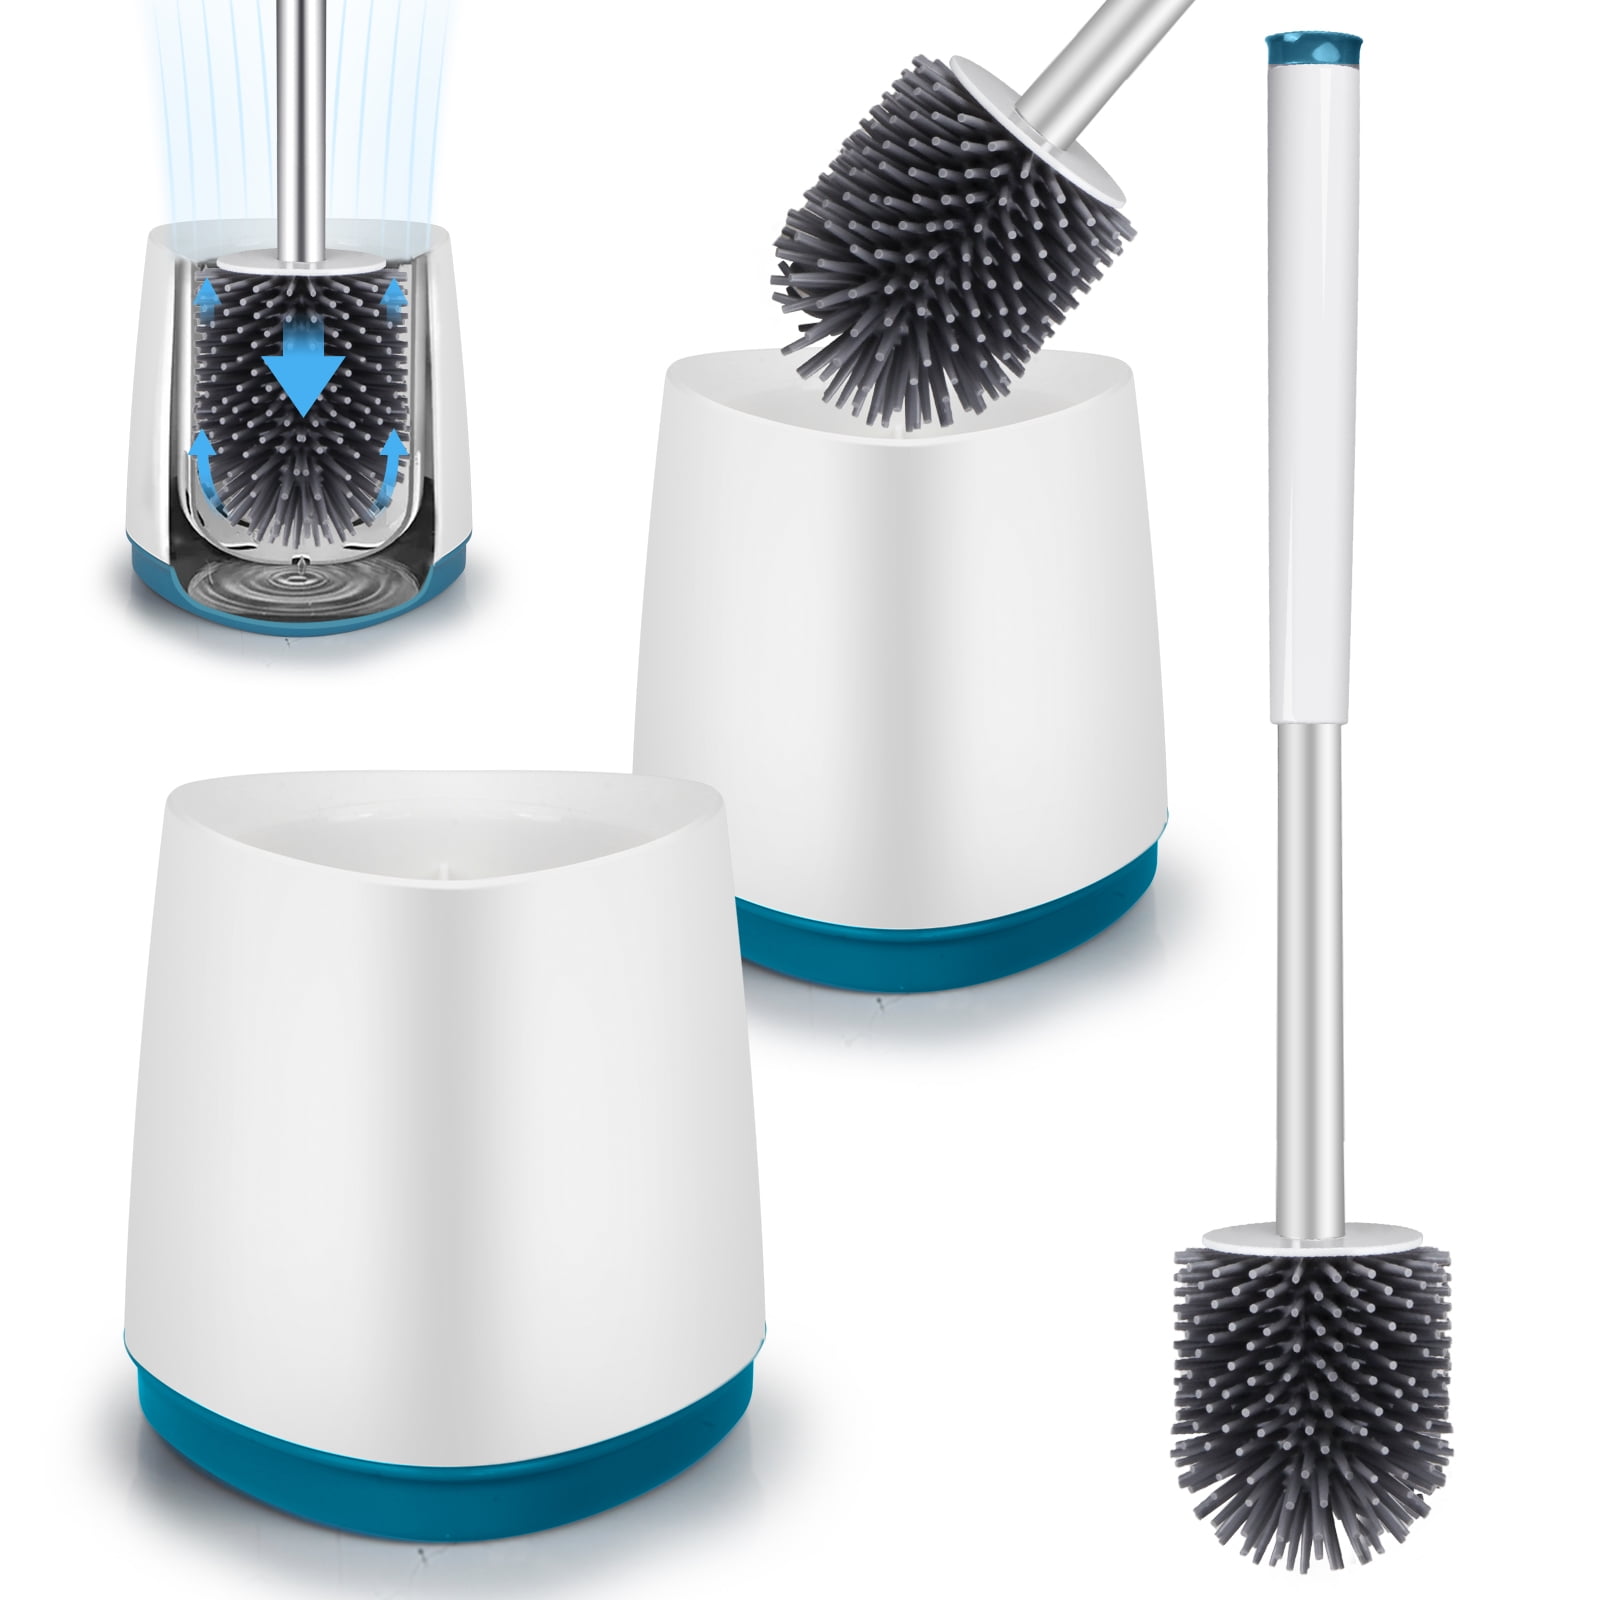 Silicone Toilet Brush Holder, Toilet Bowl Brushes Holders